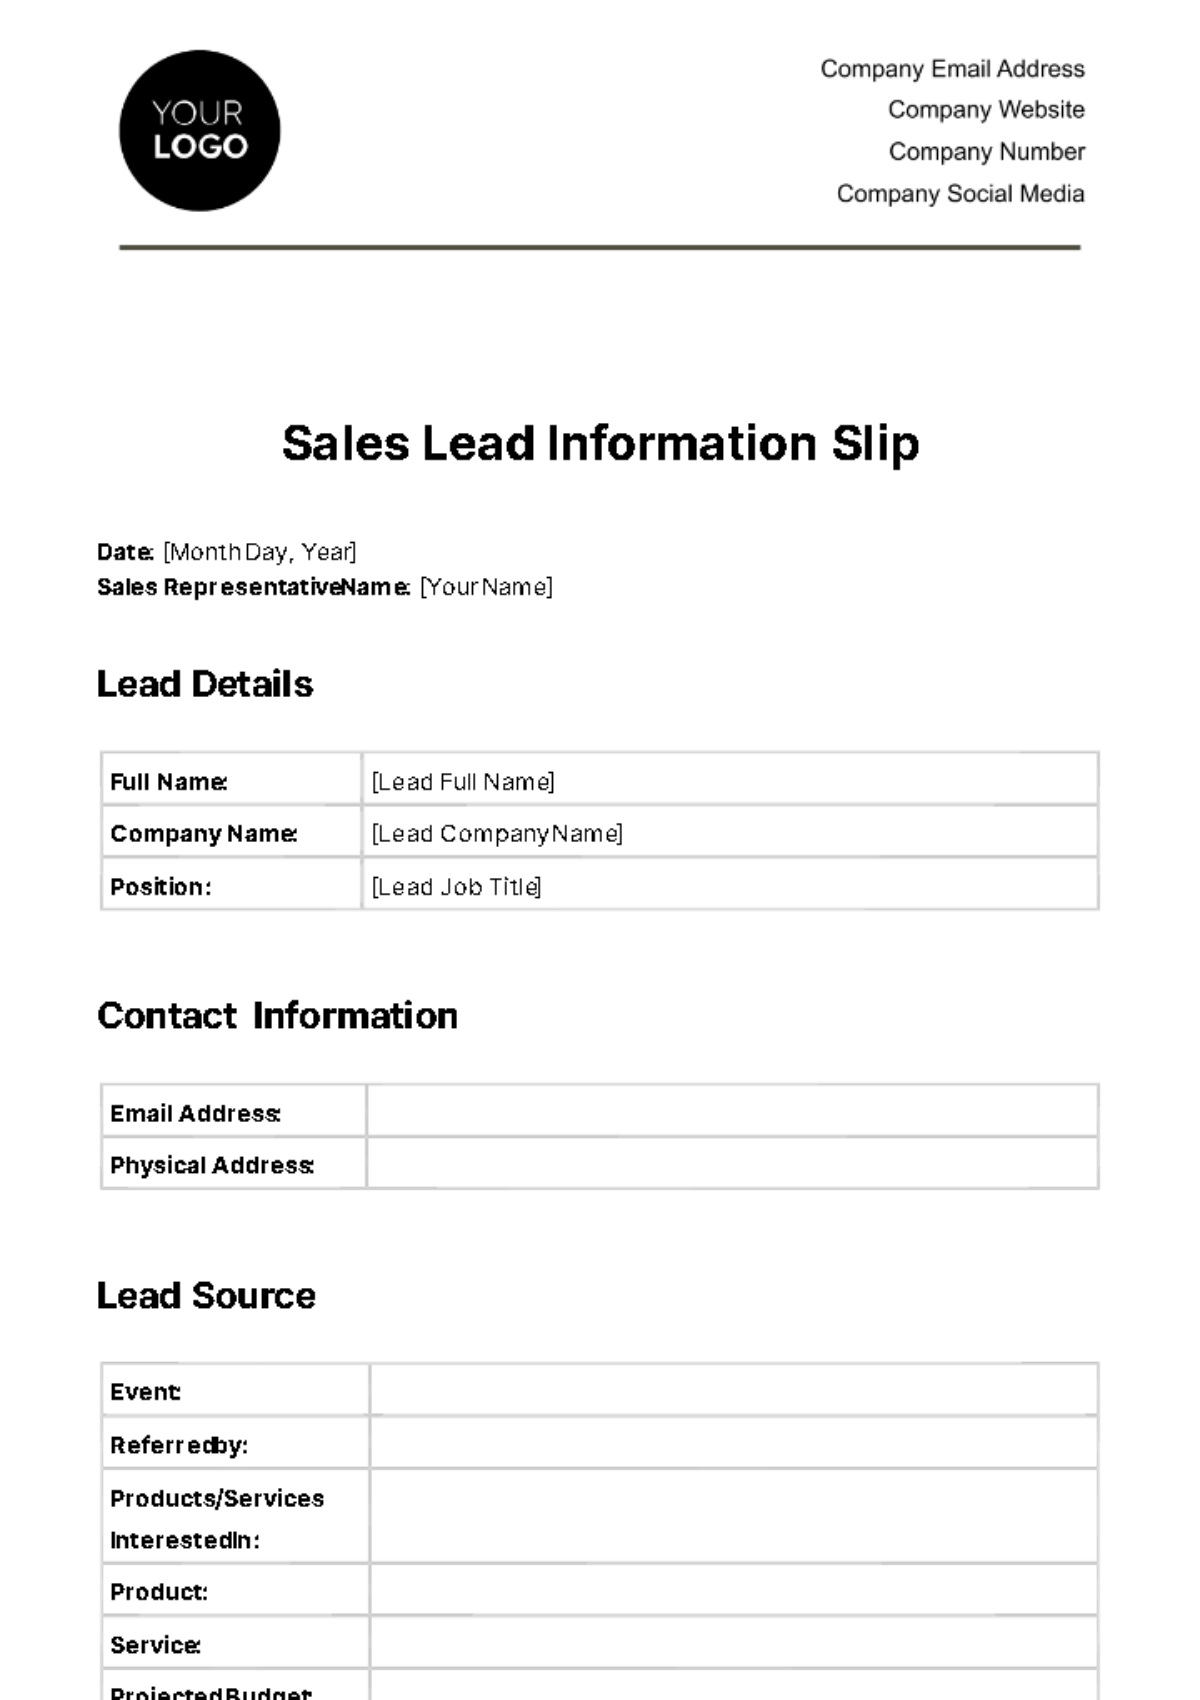 Free Sales Lead Information Slip Template